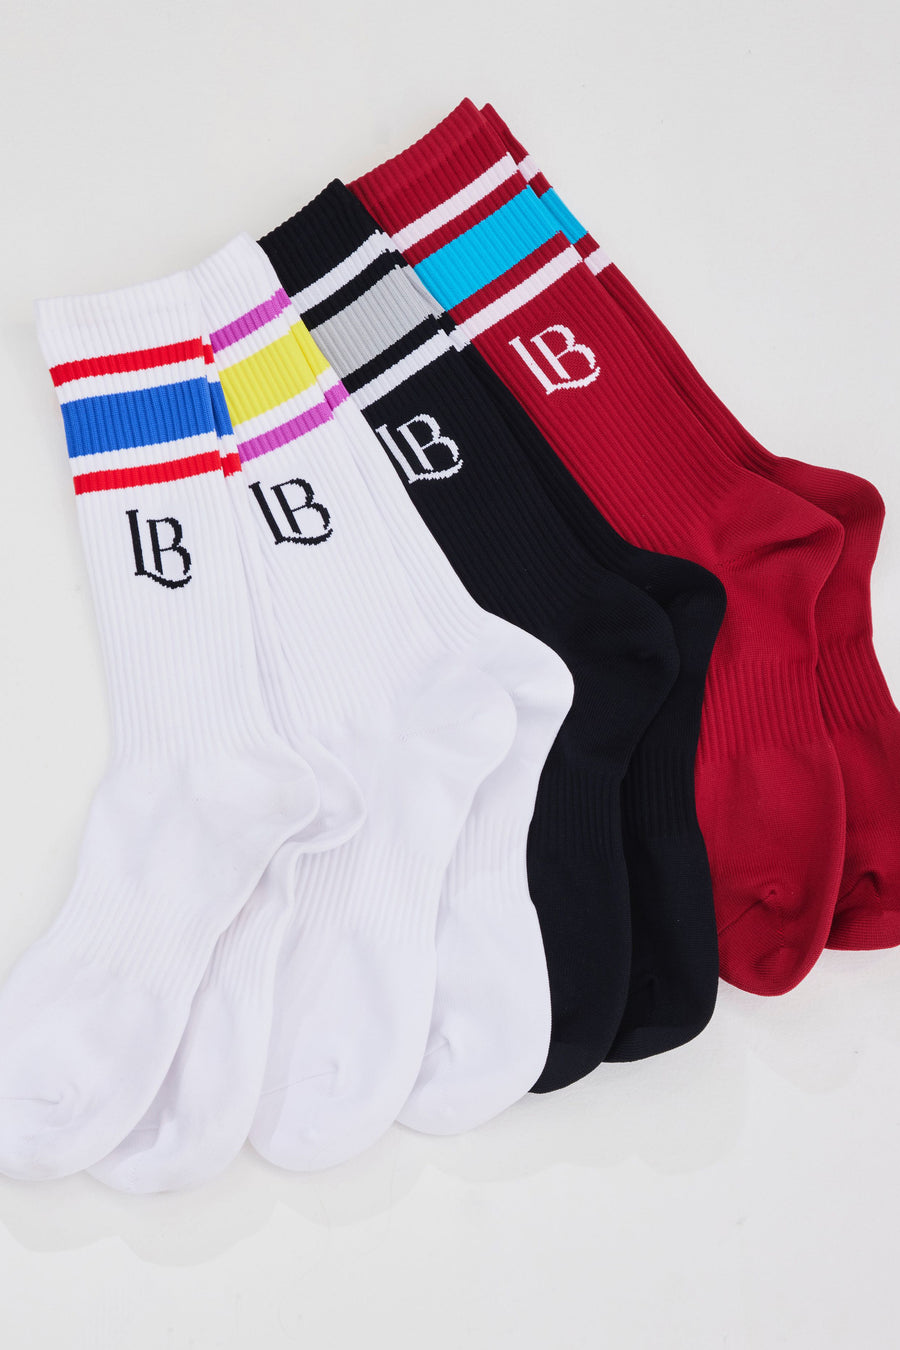 LITTLEBIG  Socks(Black)